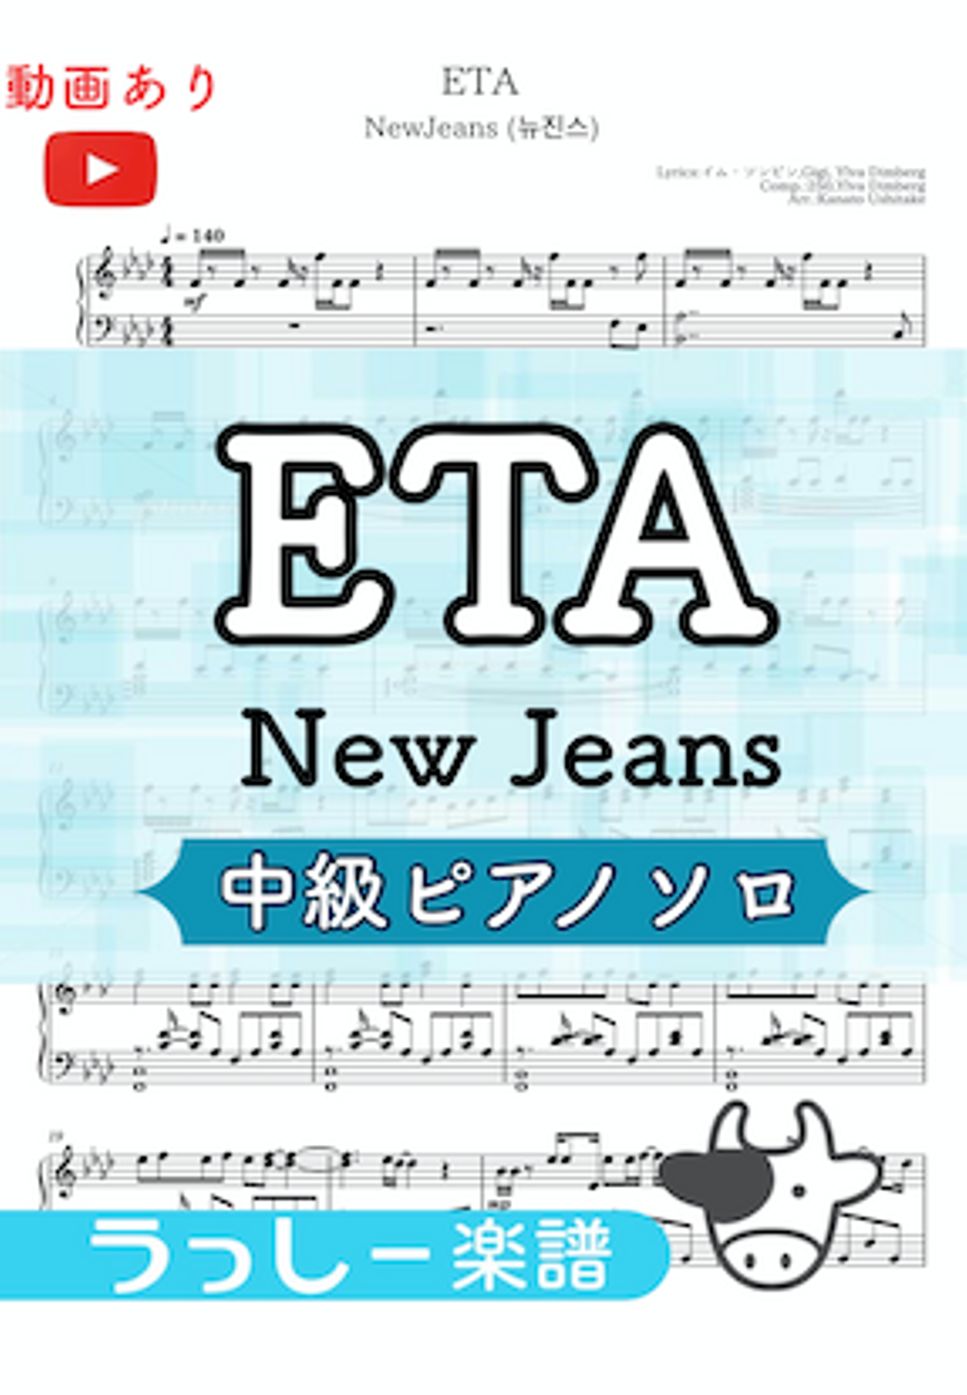 New Jeans - ETA (ピアノ/中級) by 牛武奏人